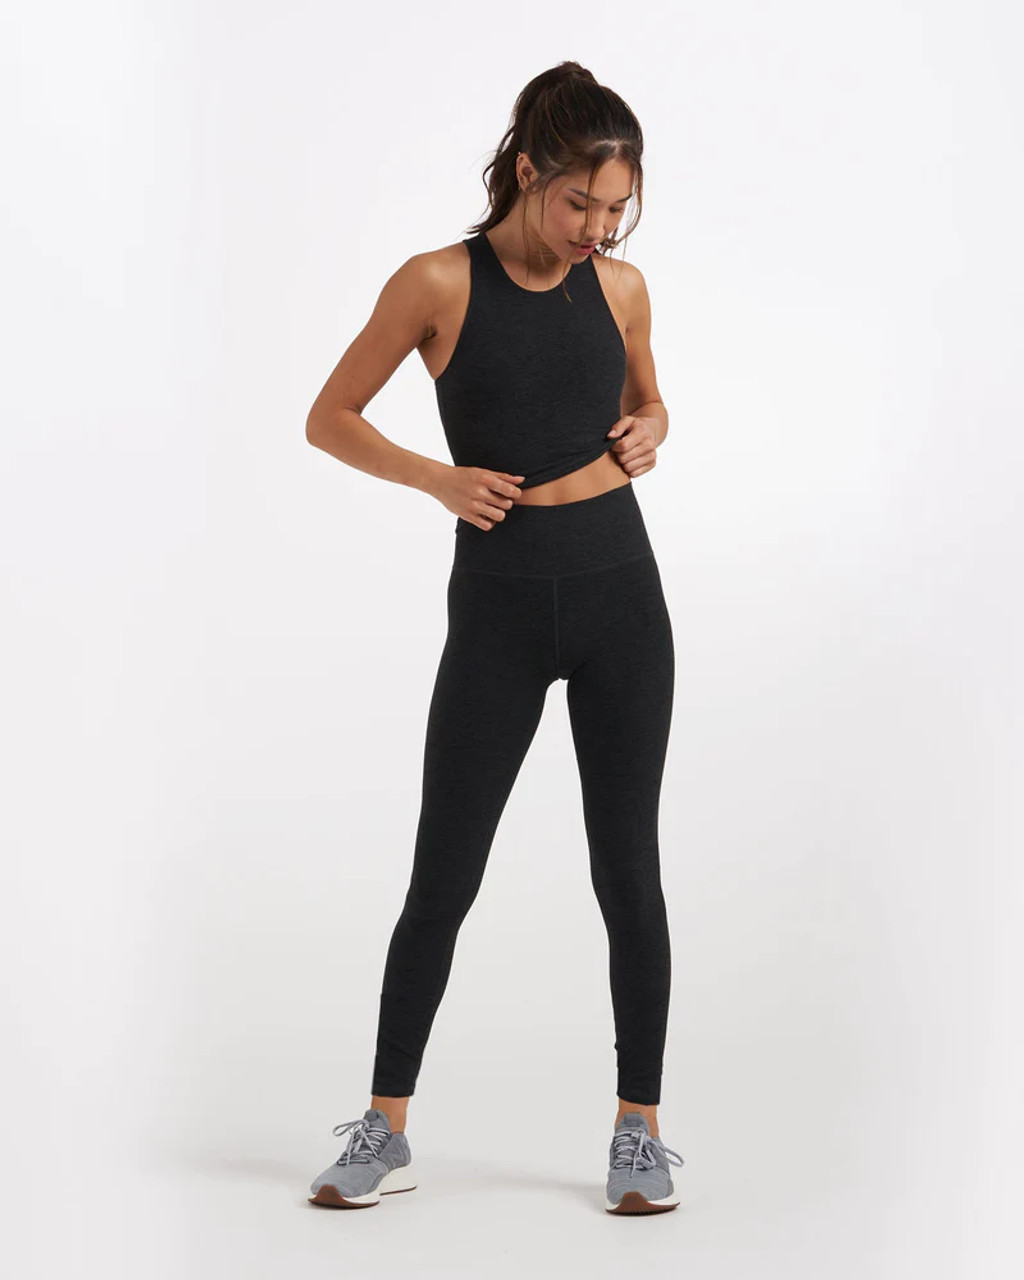 Vuori Asymmetric Block Leggings Stretch Yoga Black Camo Contrast XLarge